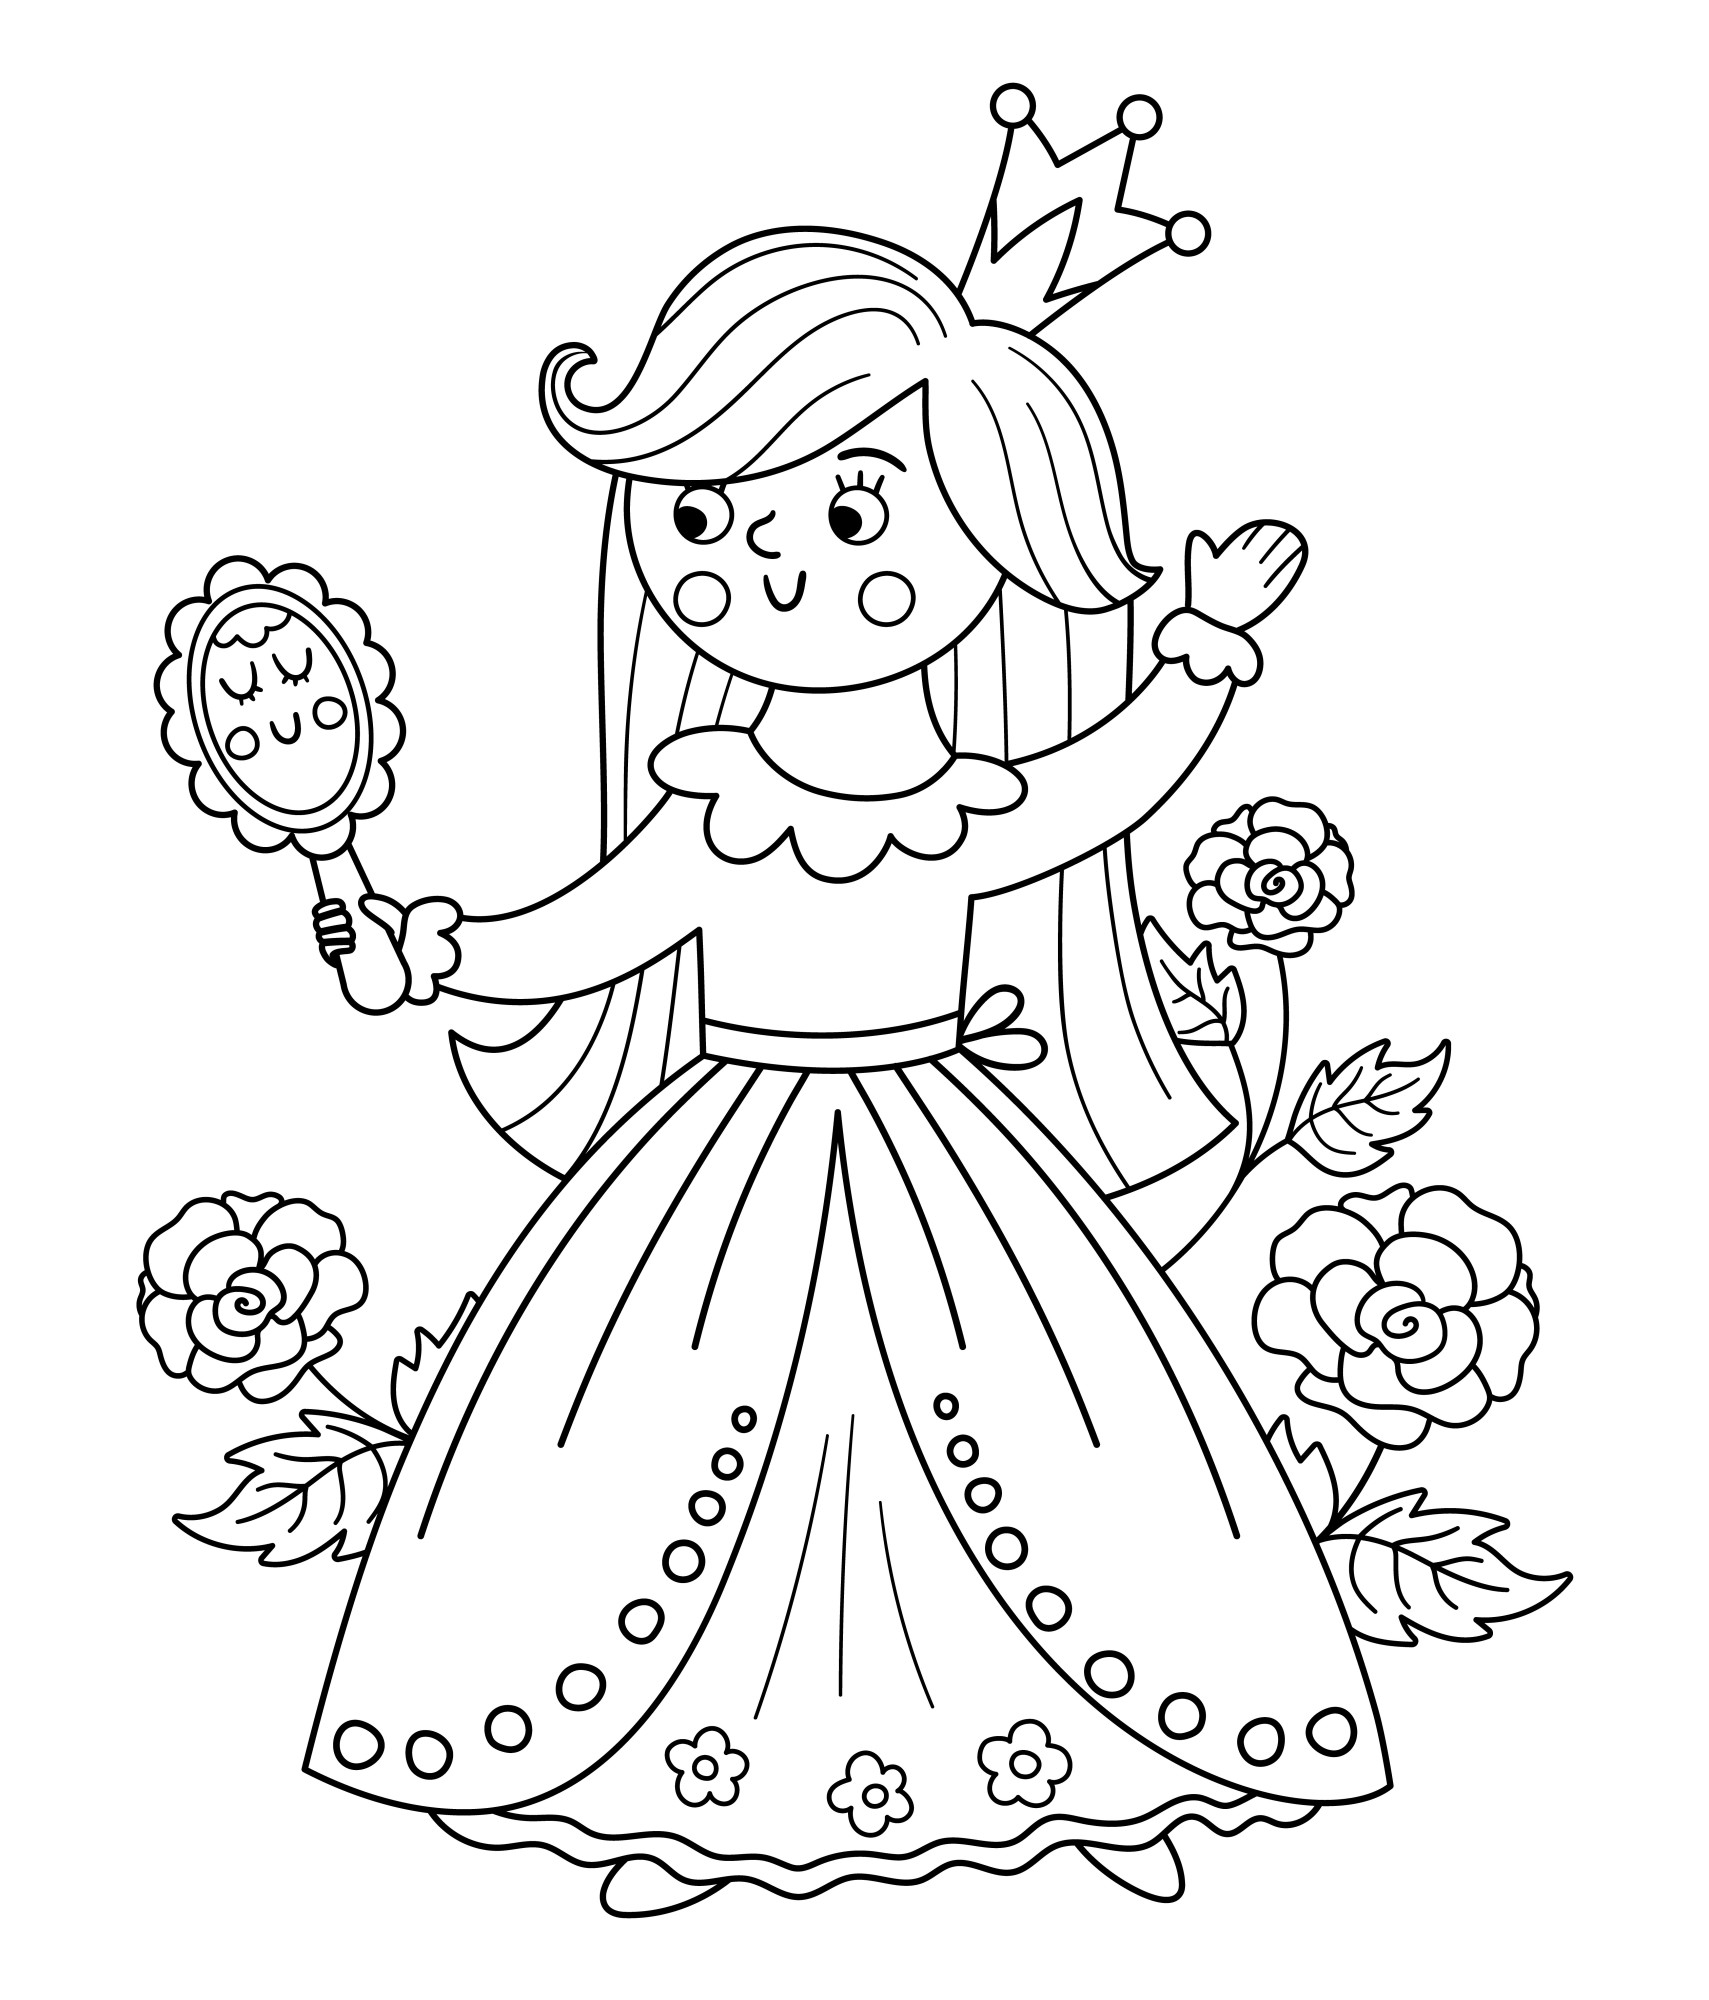 Раскраска для детей: фантазийная принцесса с зеркалом на фоне цветов